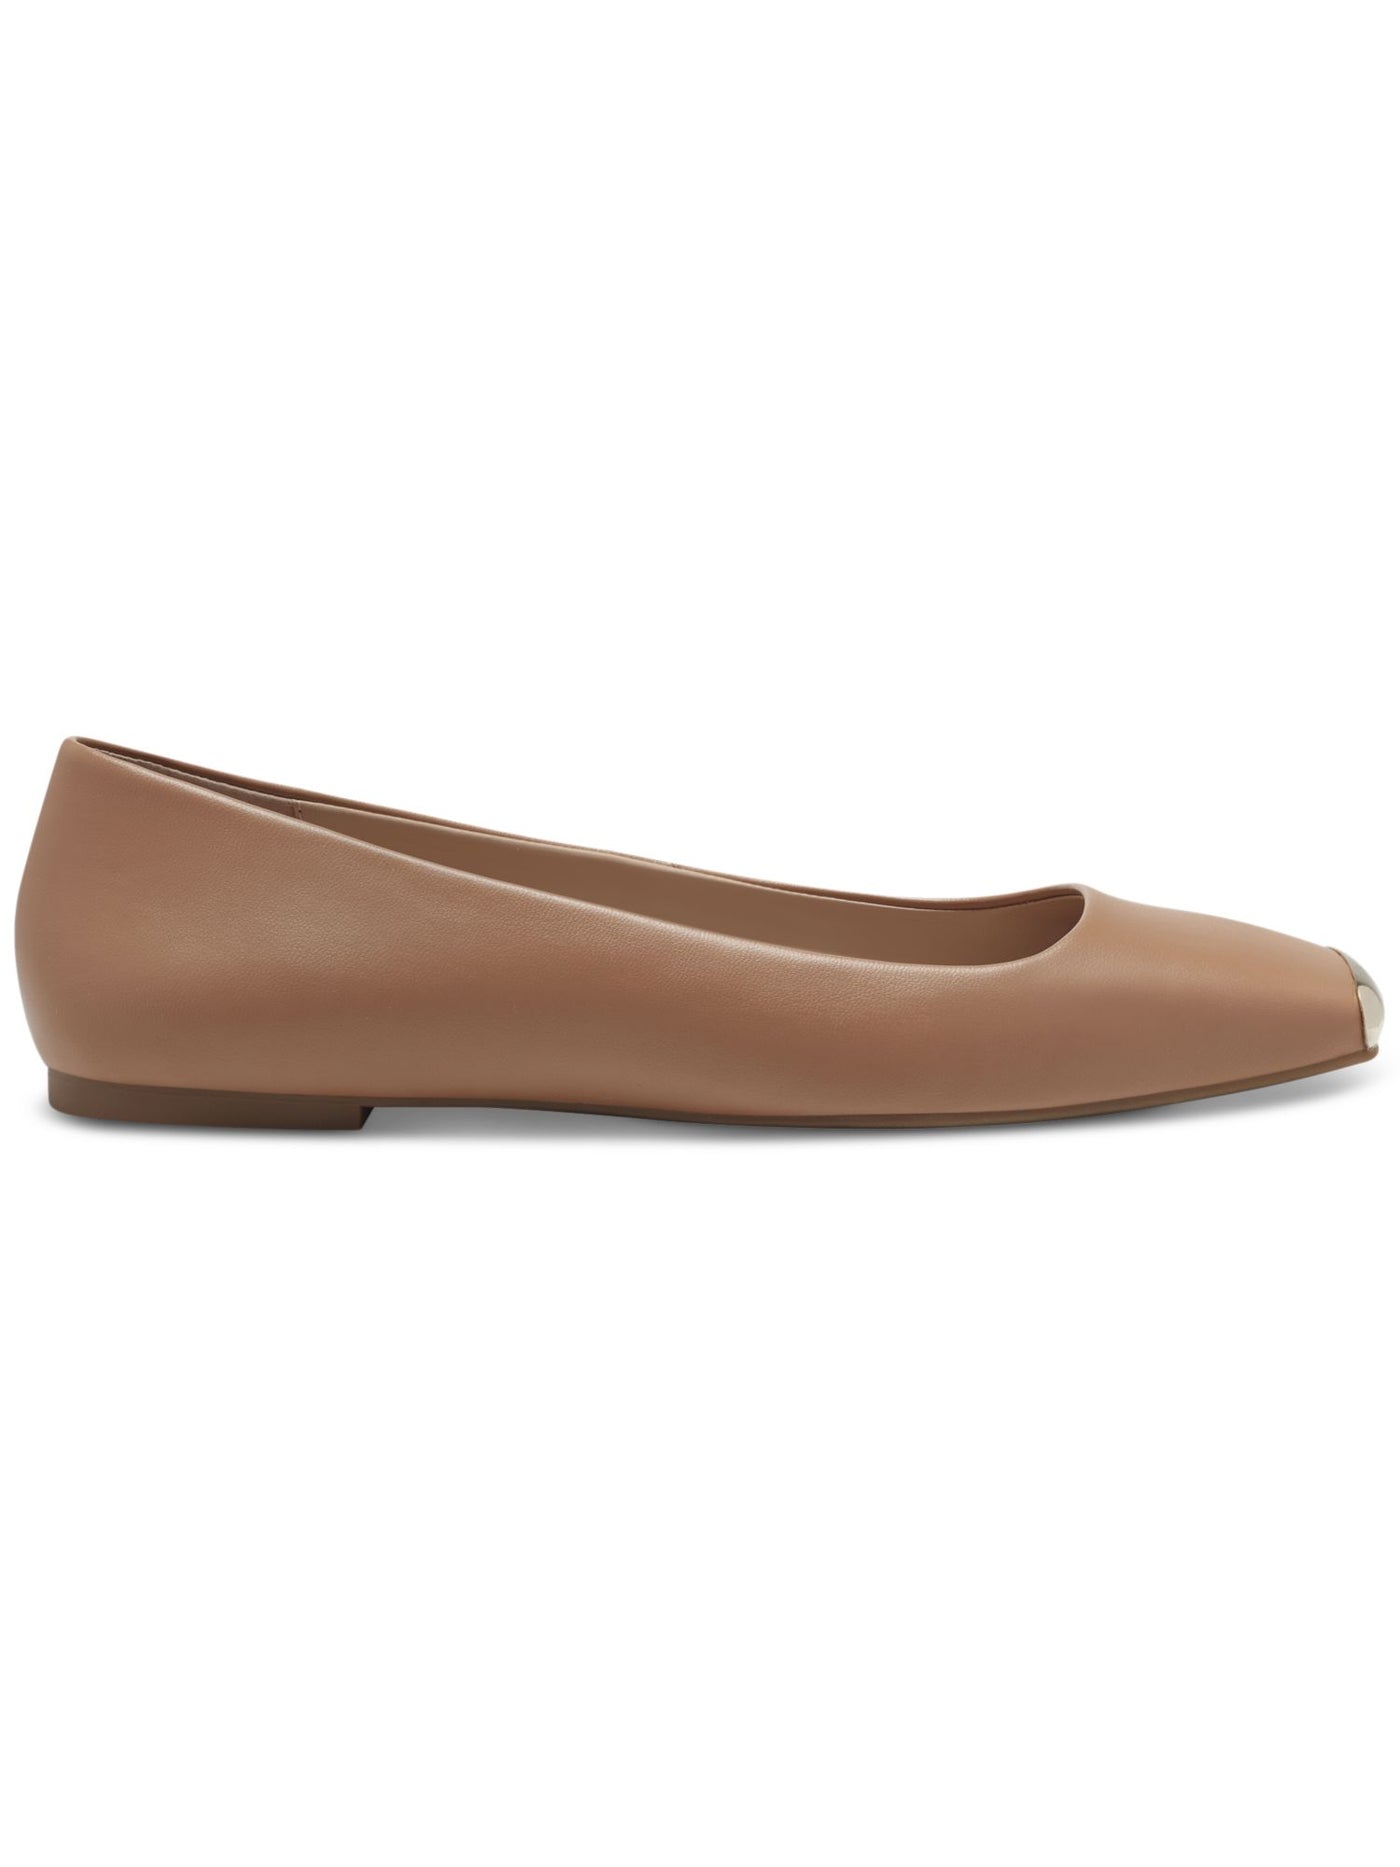 ALFANI Womens Brown Flexible Sole Padded Metallic Neptoon Square Toe Block Heel Slip On Flats Shoes 7 M